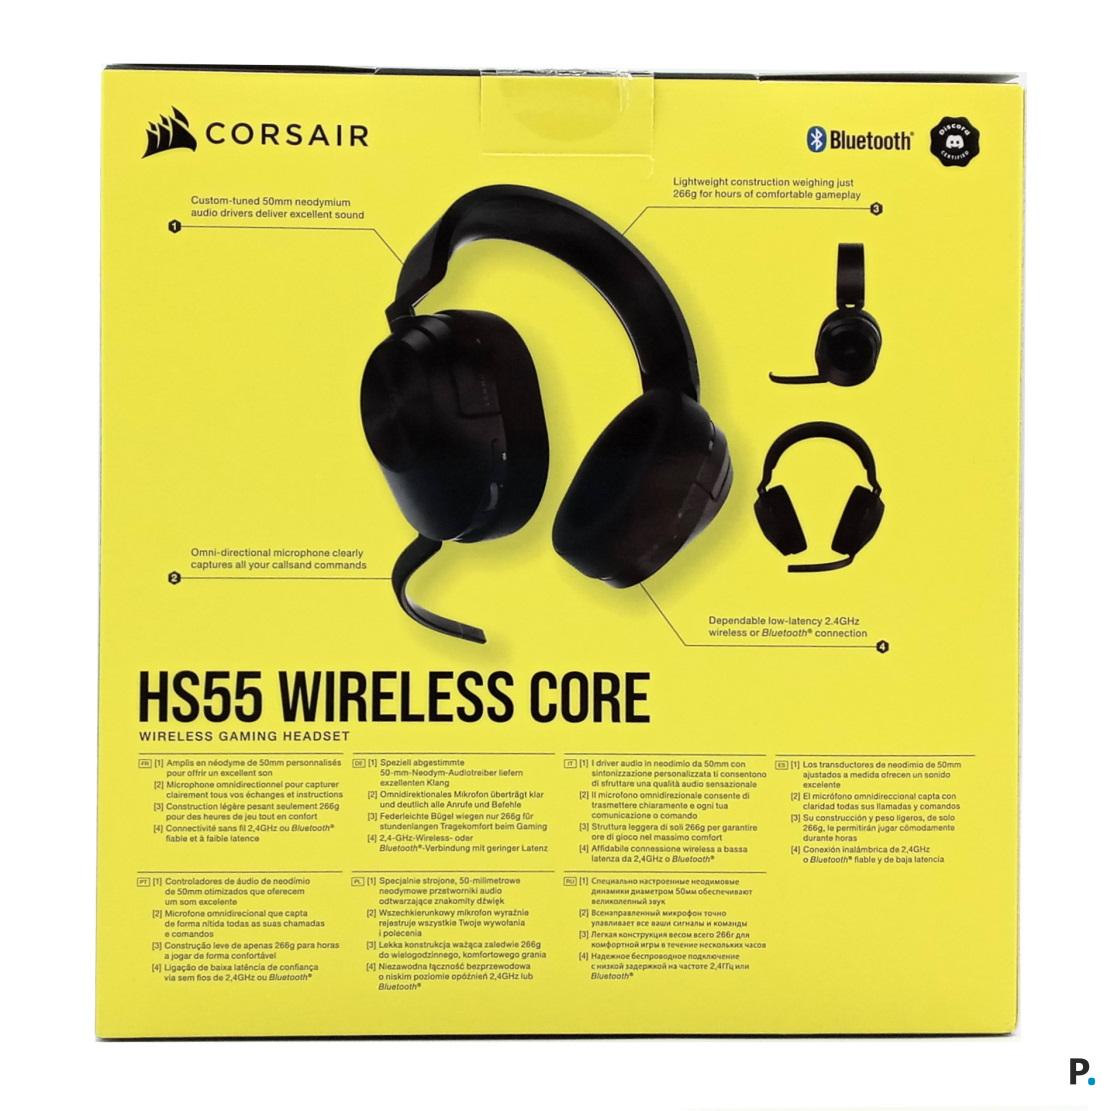 2 Corsair HS55 Wireless Core Review